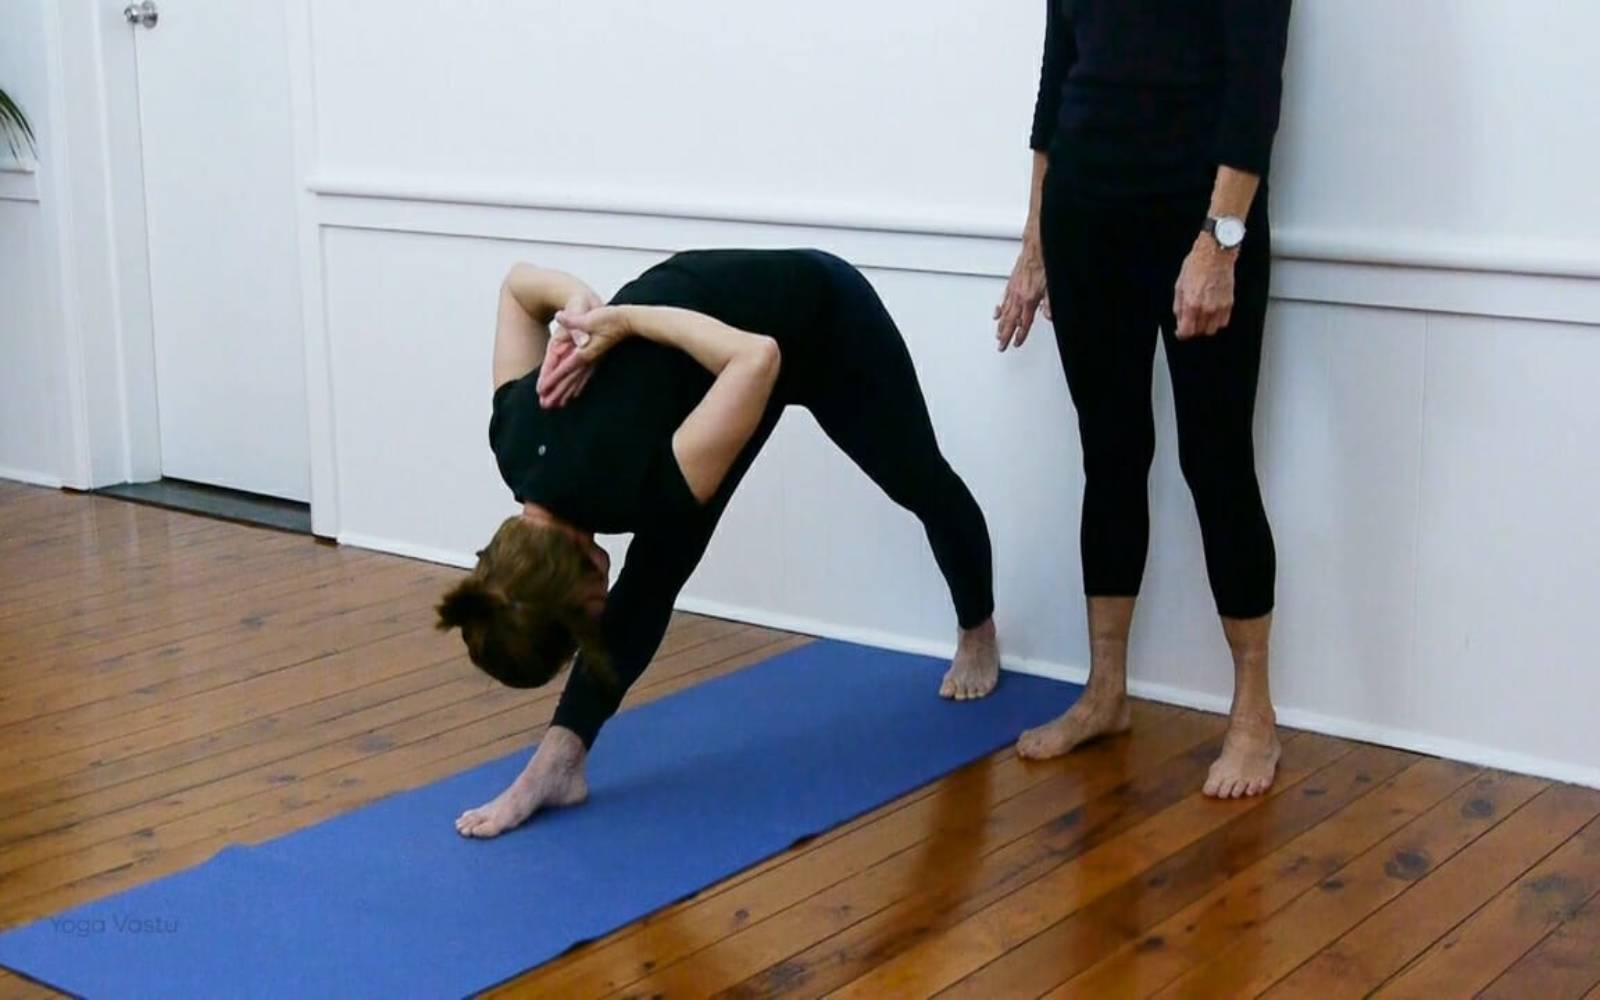 Yin Yoga 50+ – Human Kinetics